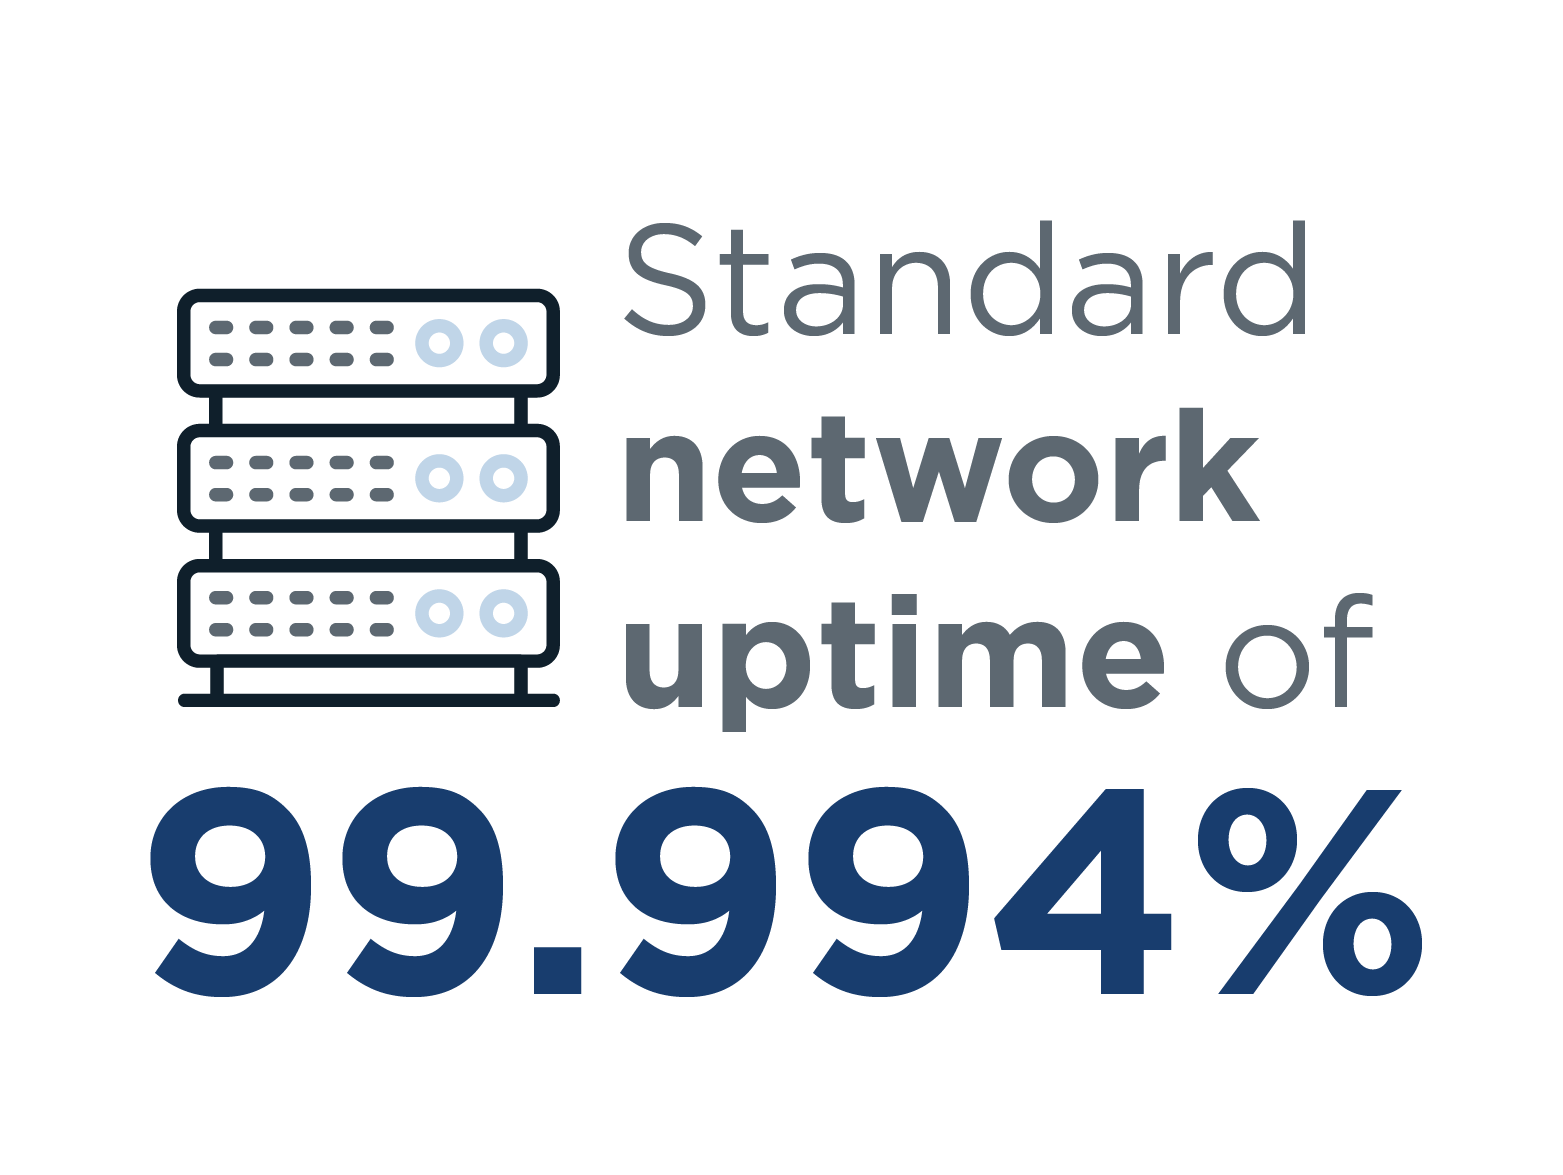 Standard network uptime of 99.994%